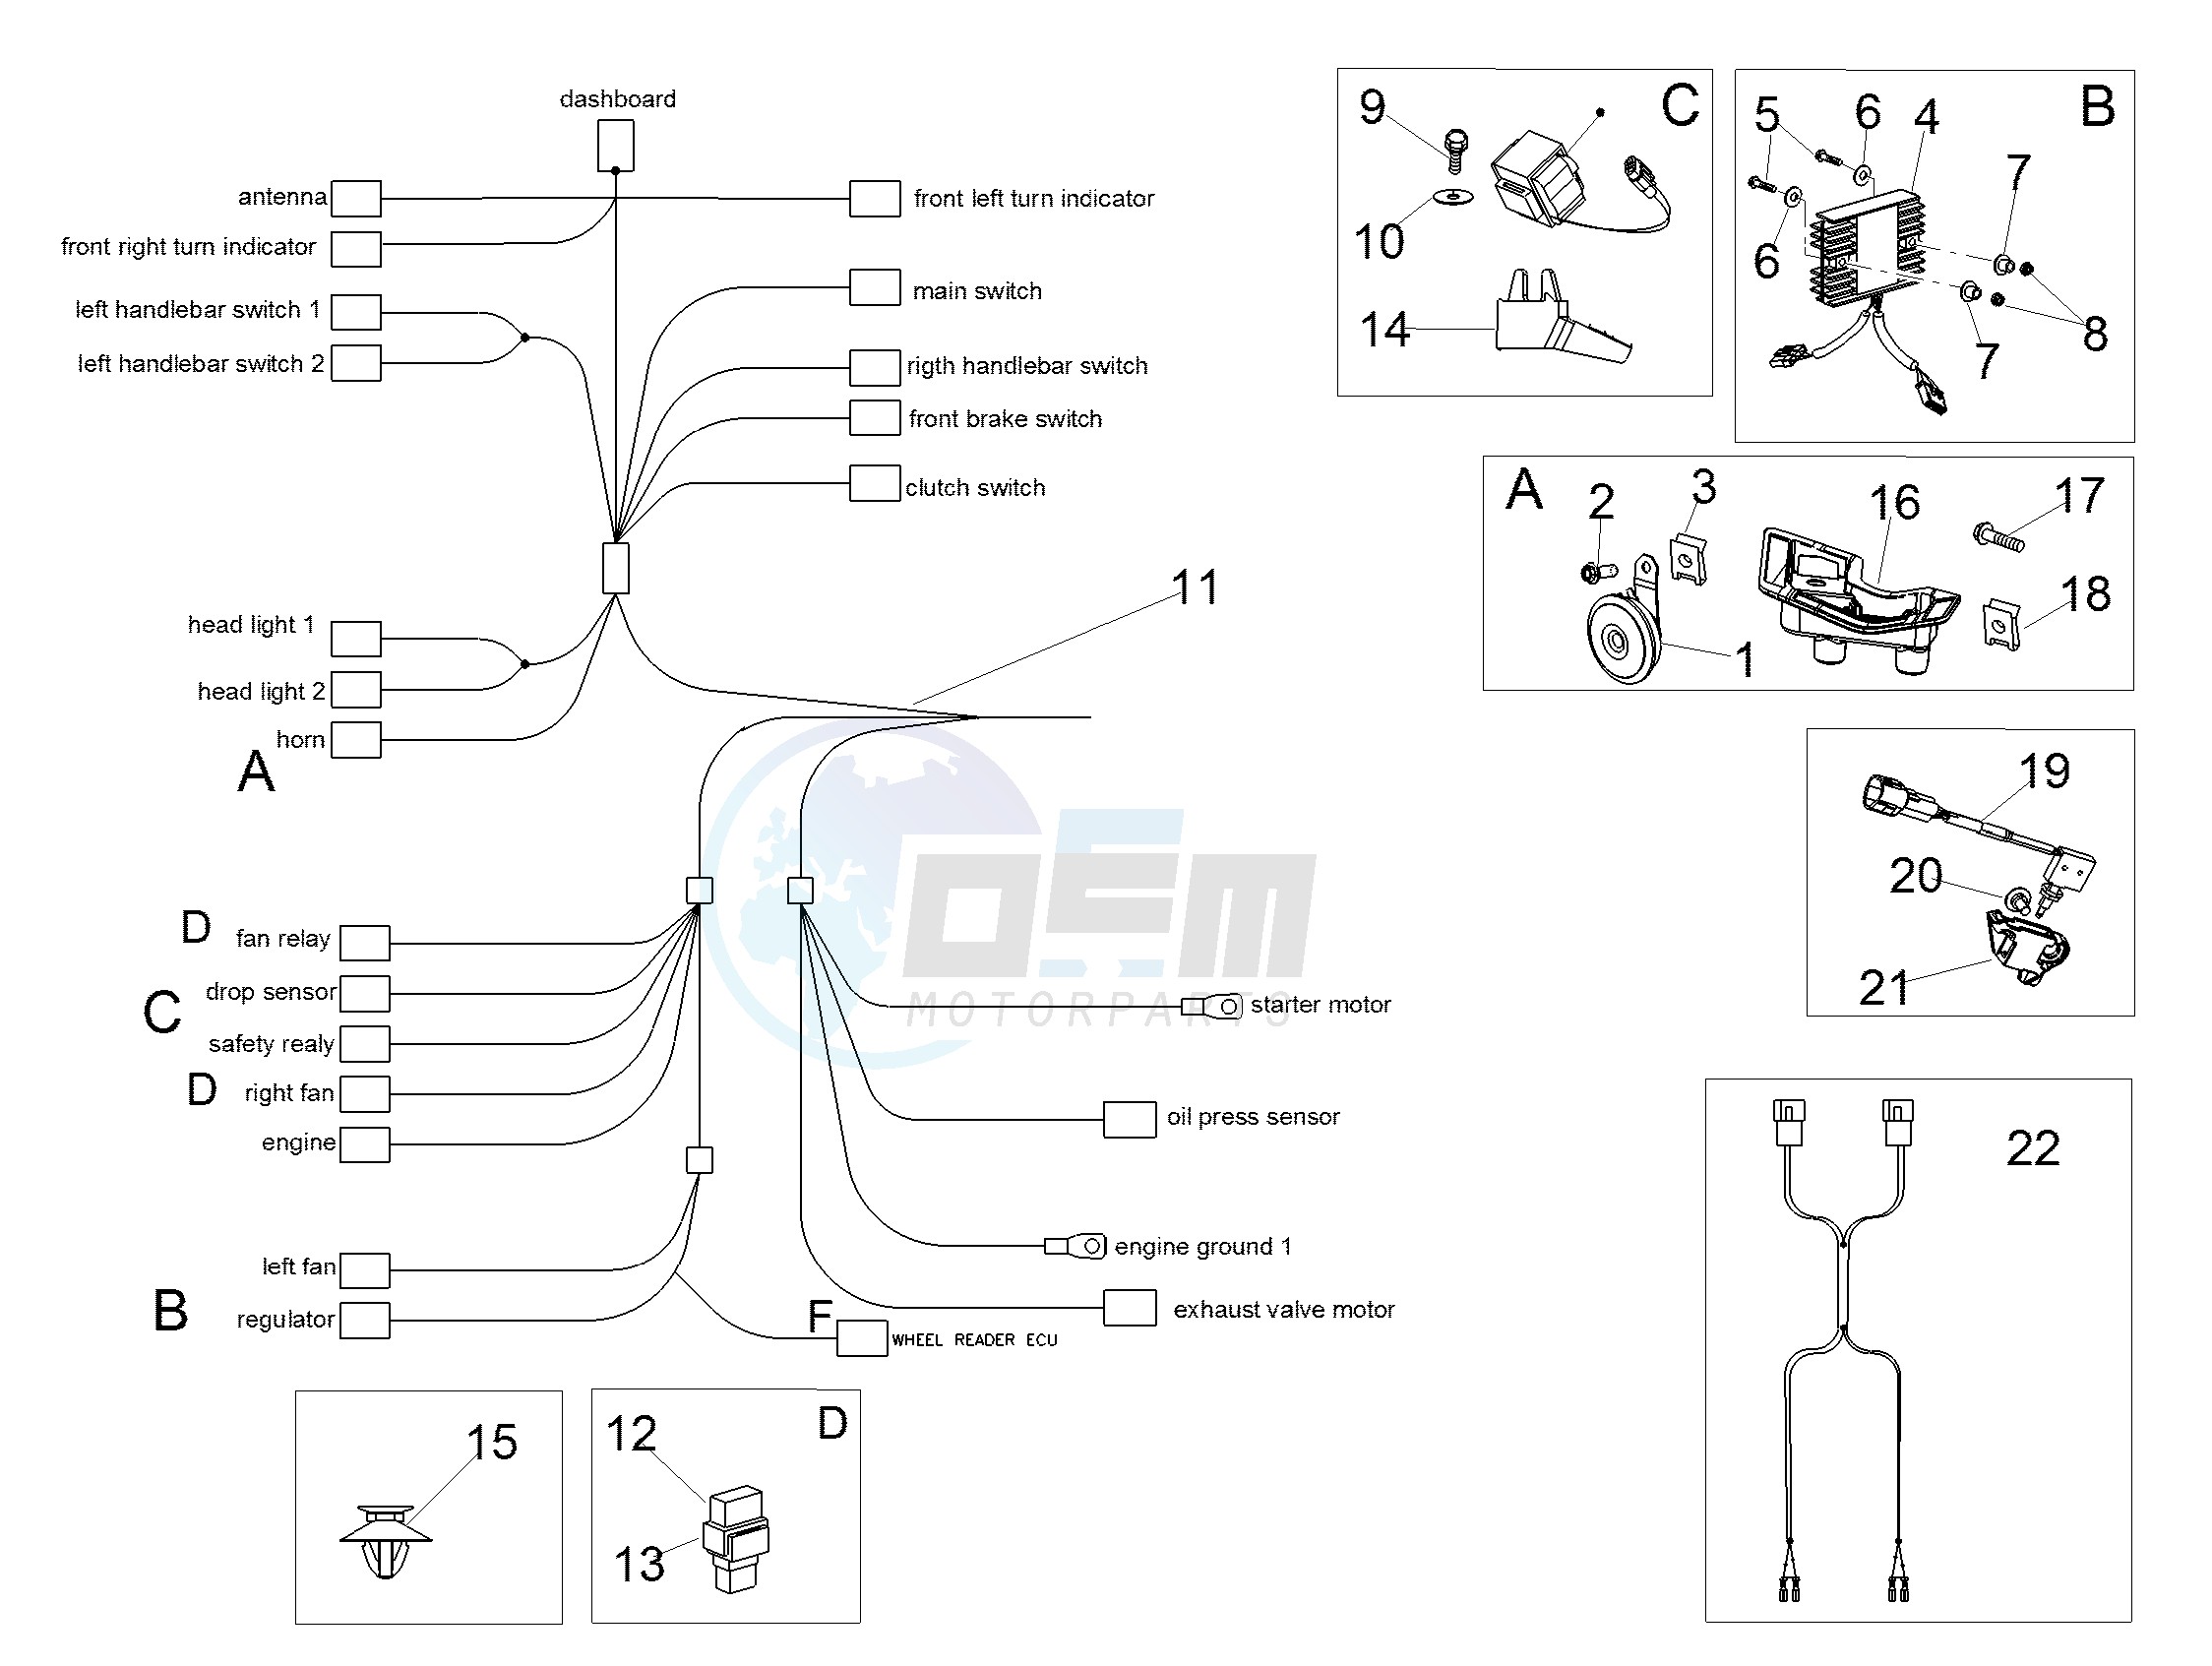 Electrical system I blueprint